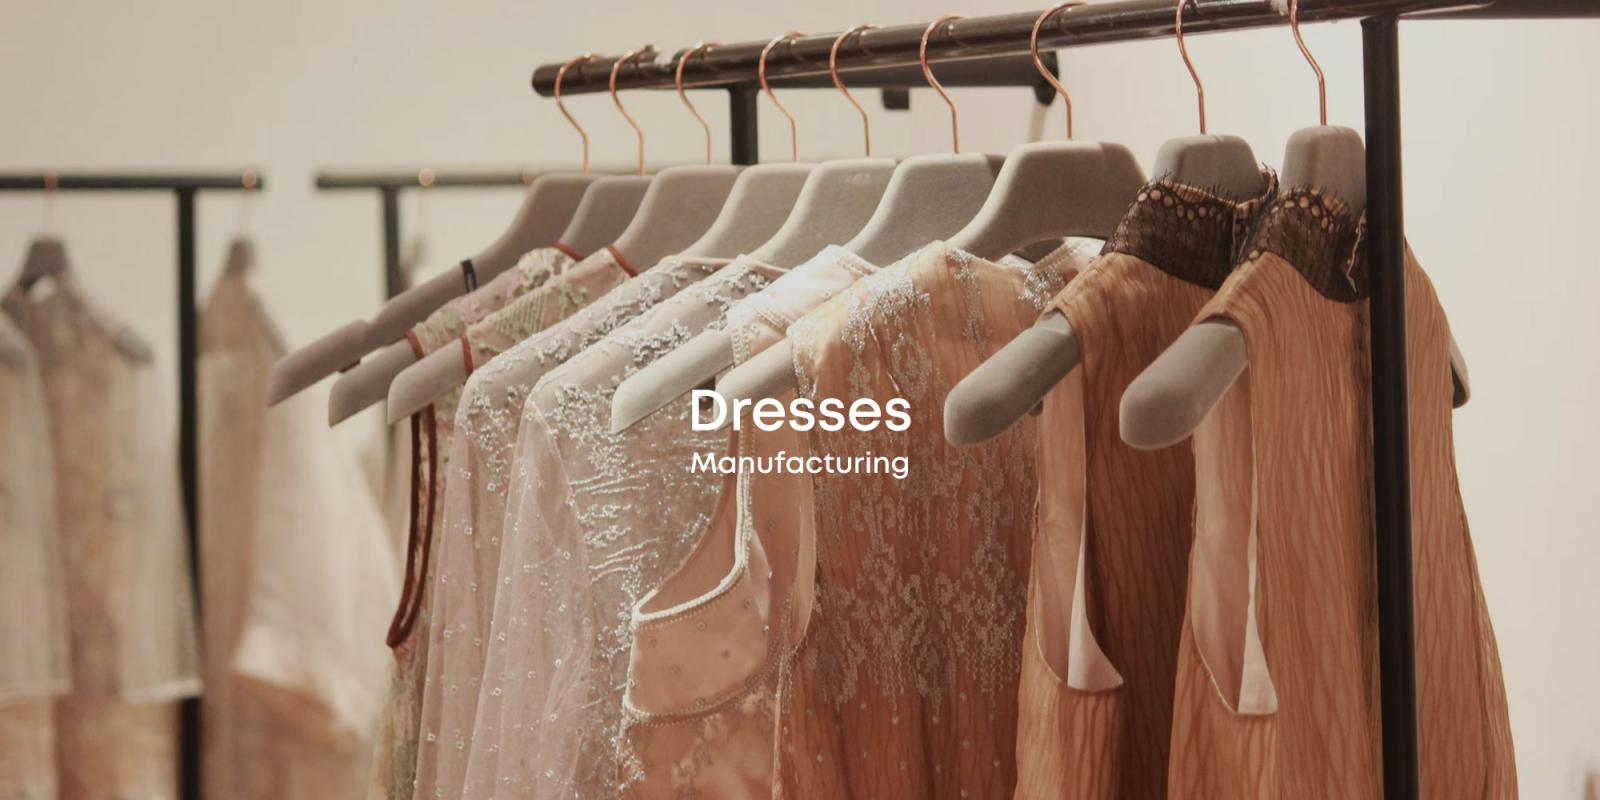 Dresses Manufacturing